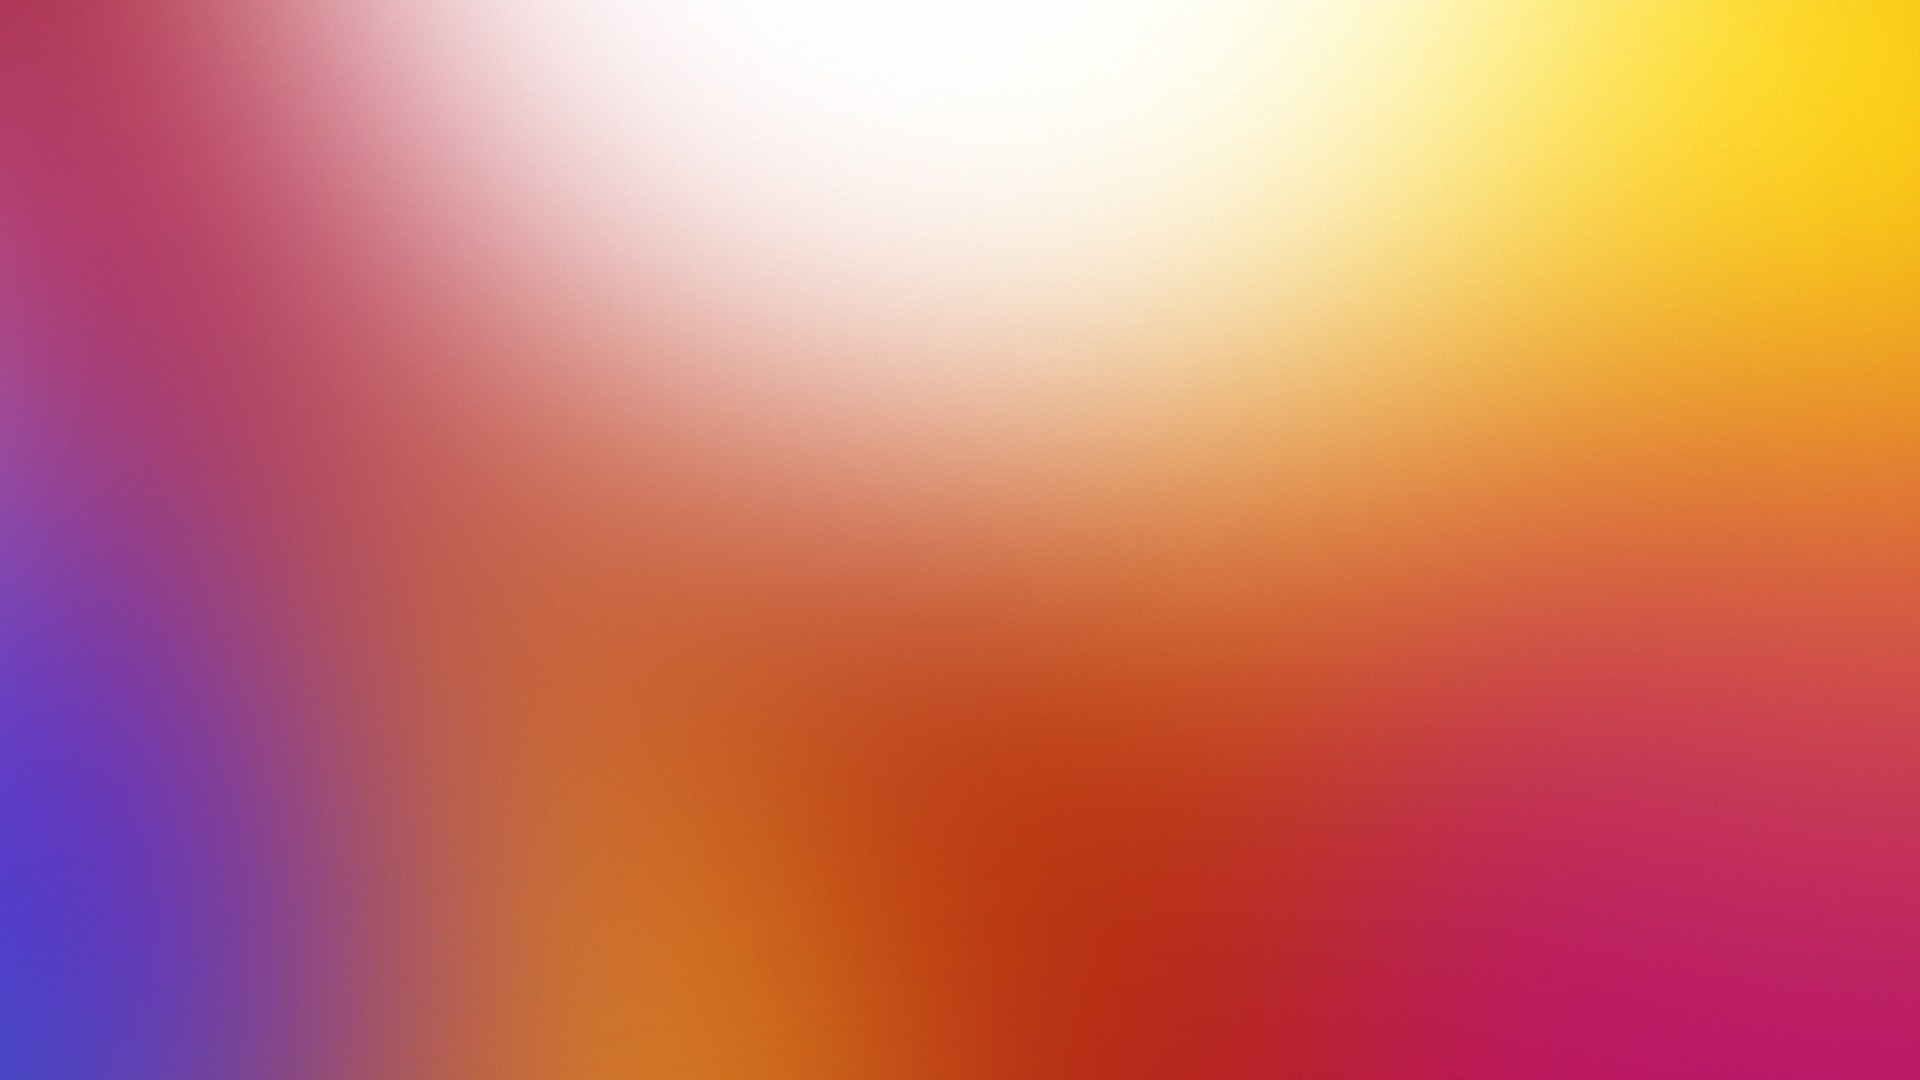 lenovo k5 note fond d'écran hd,orange,jaune,rose,violet,rouge